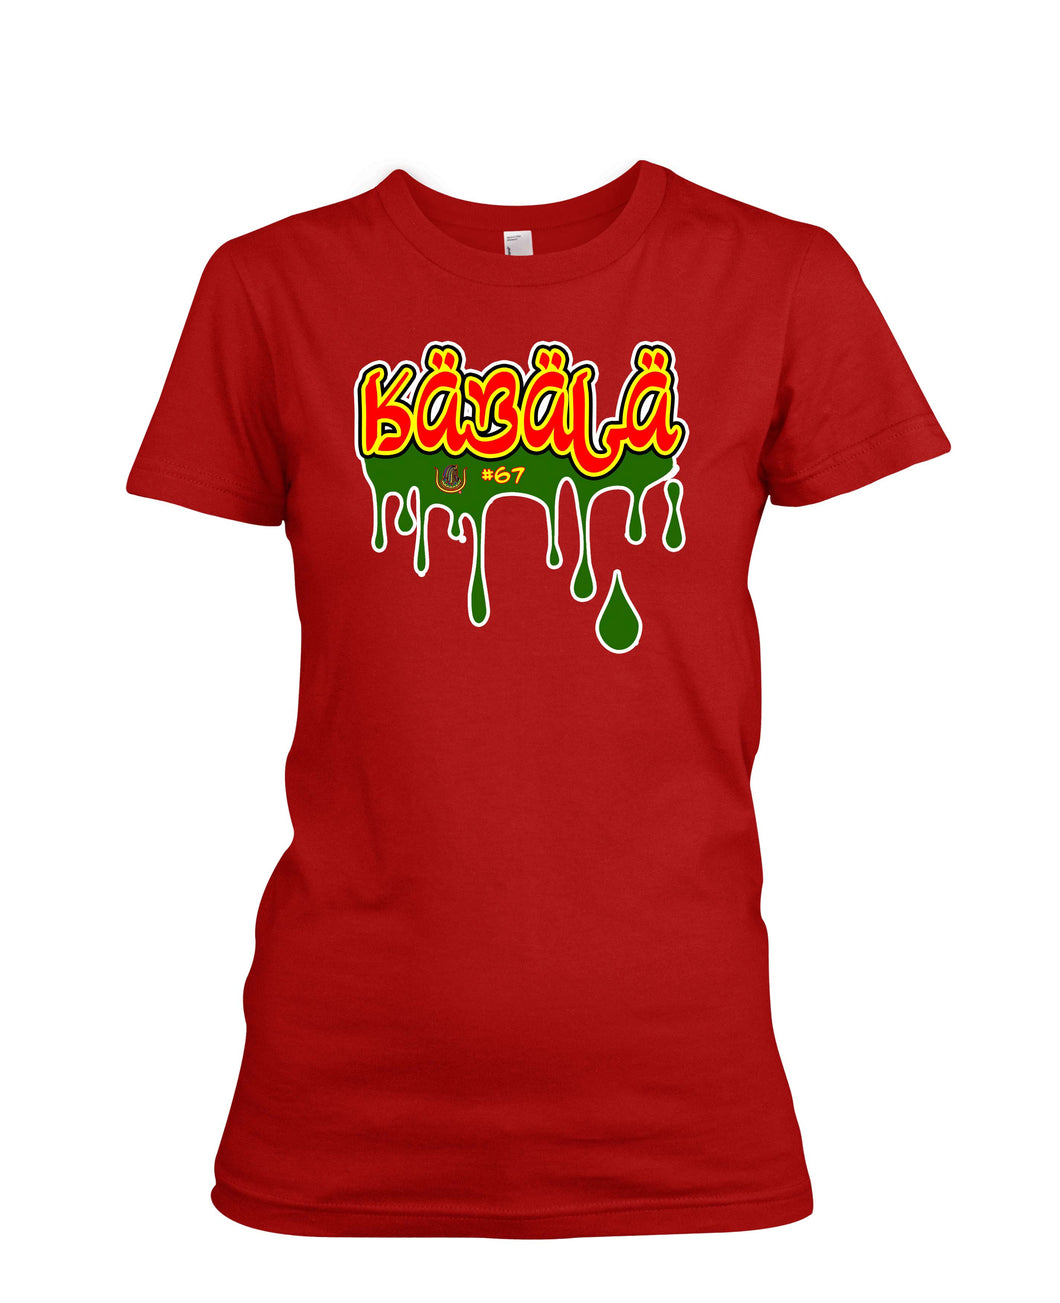 Daughters Of Kabala Court #67 T-Shirts